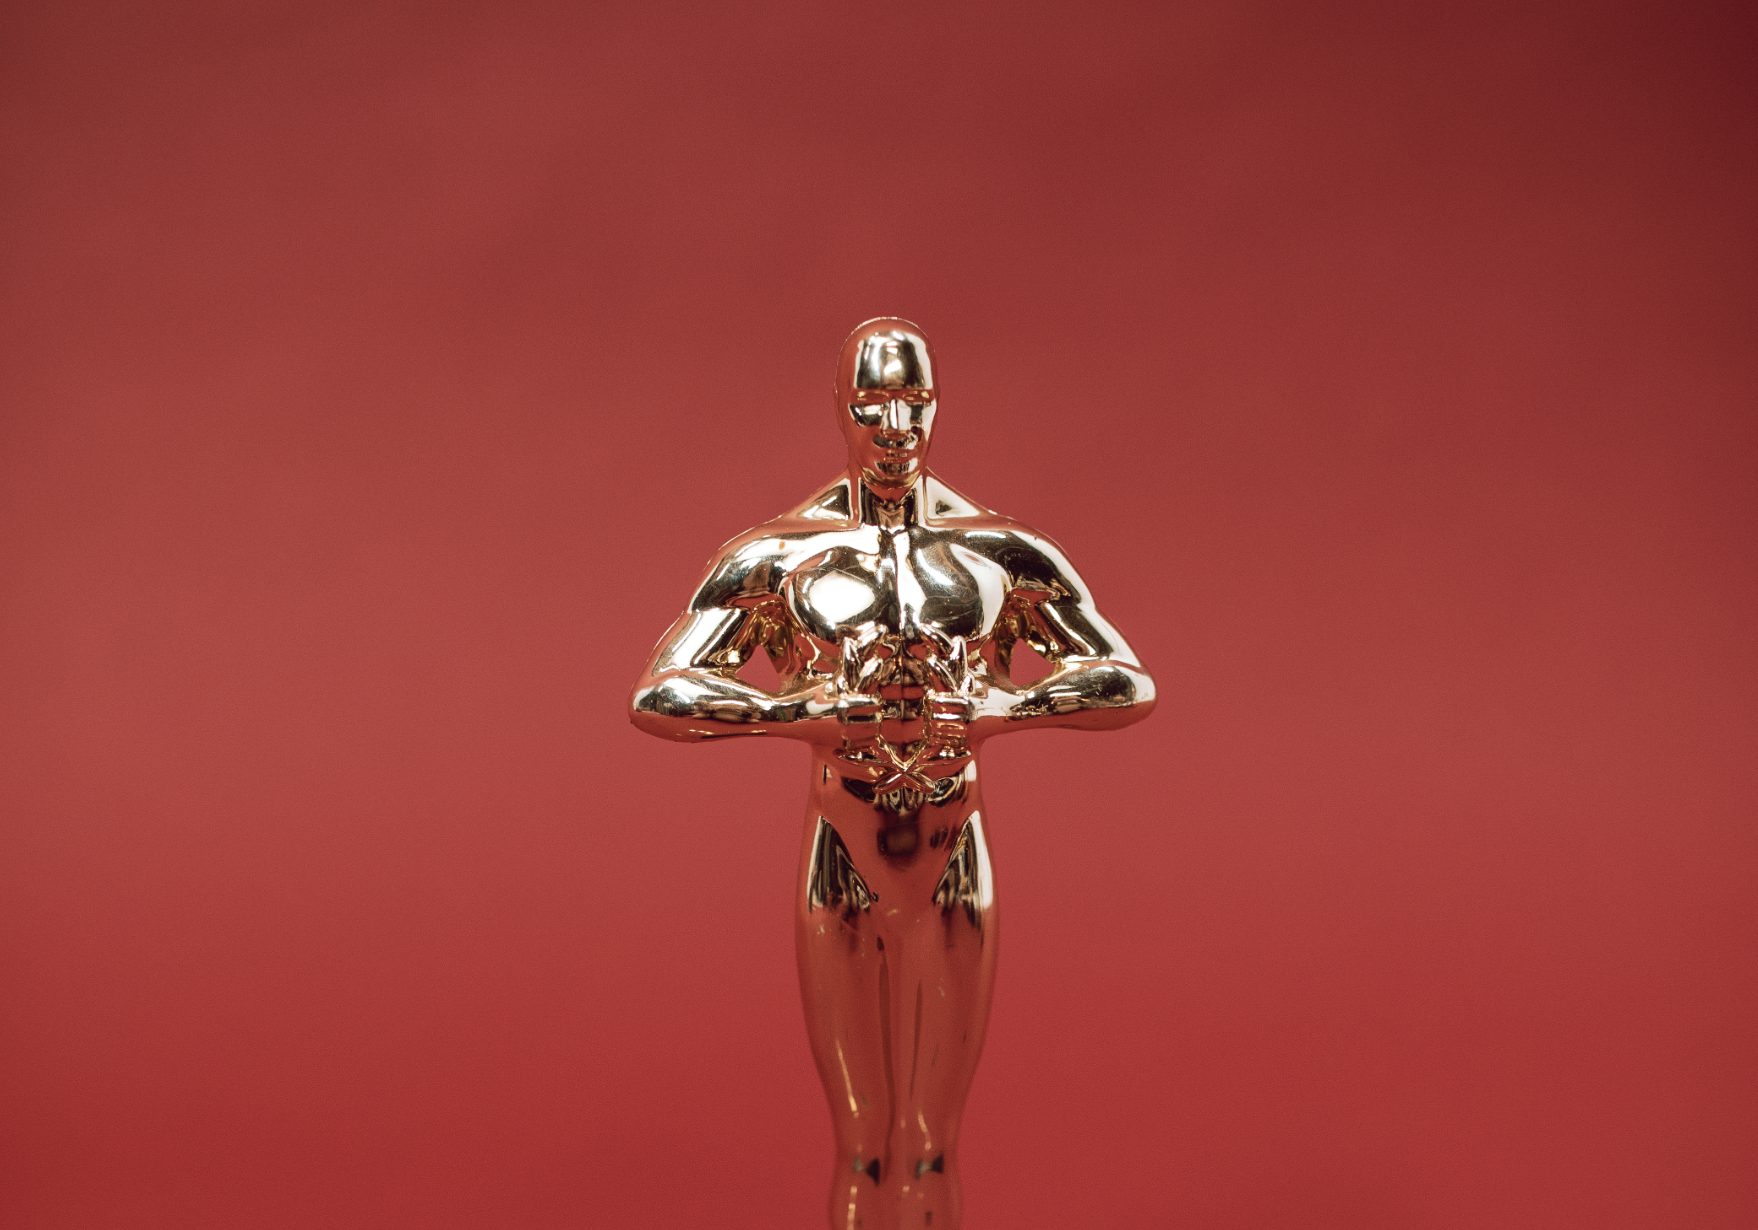 Photo of an Oscar statuette